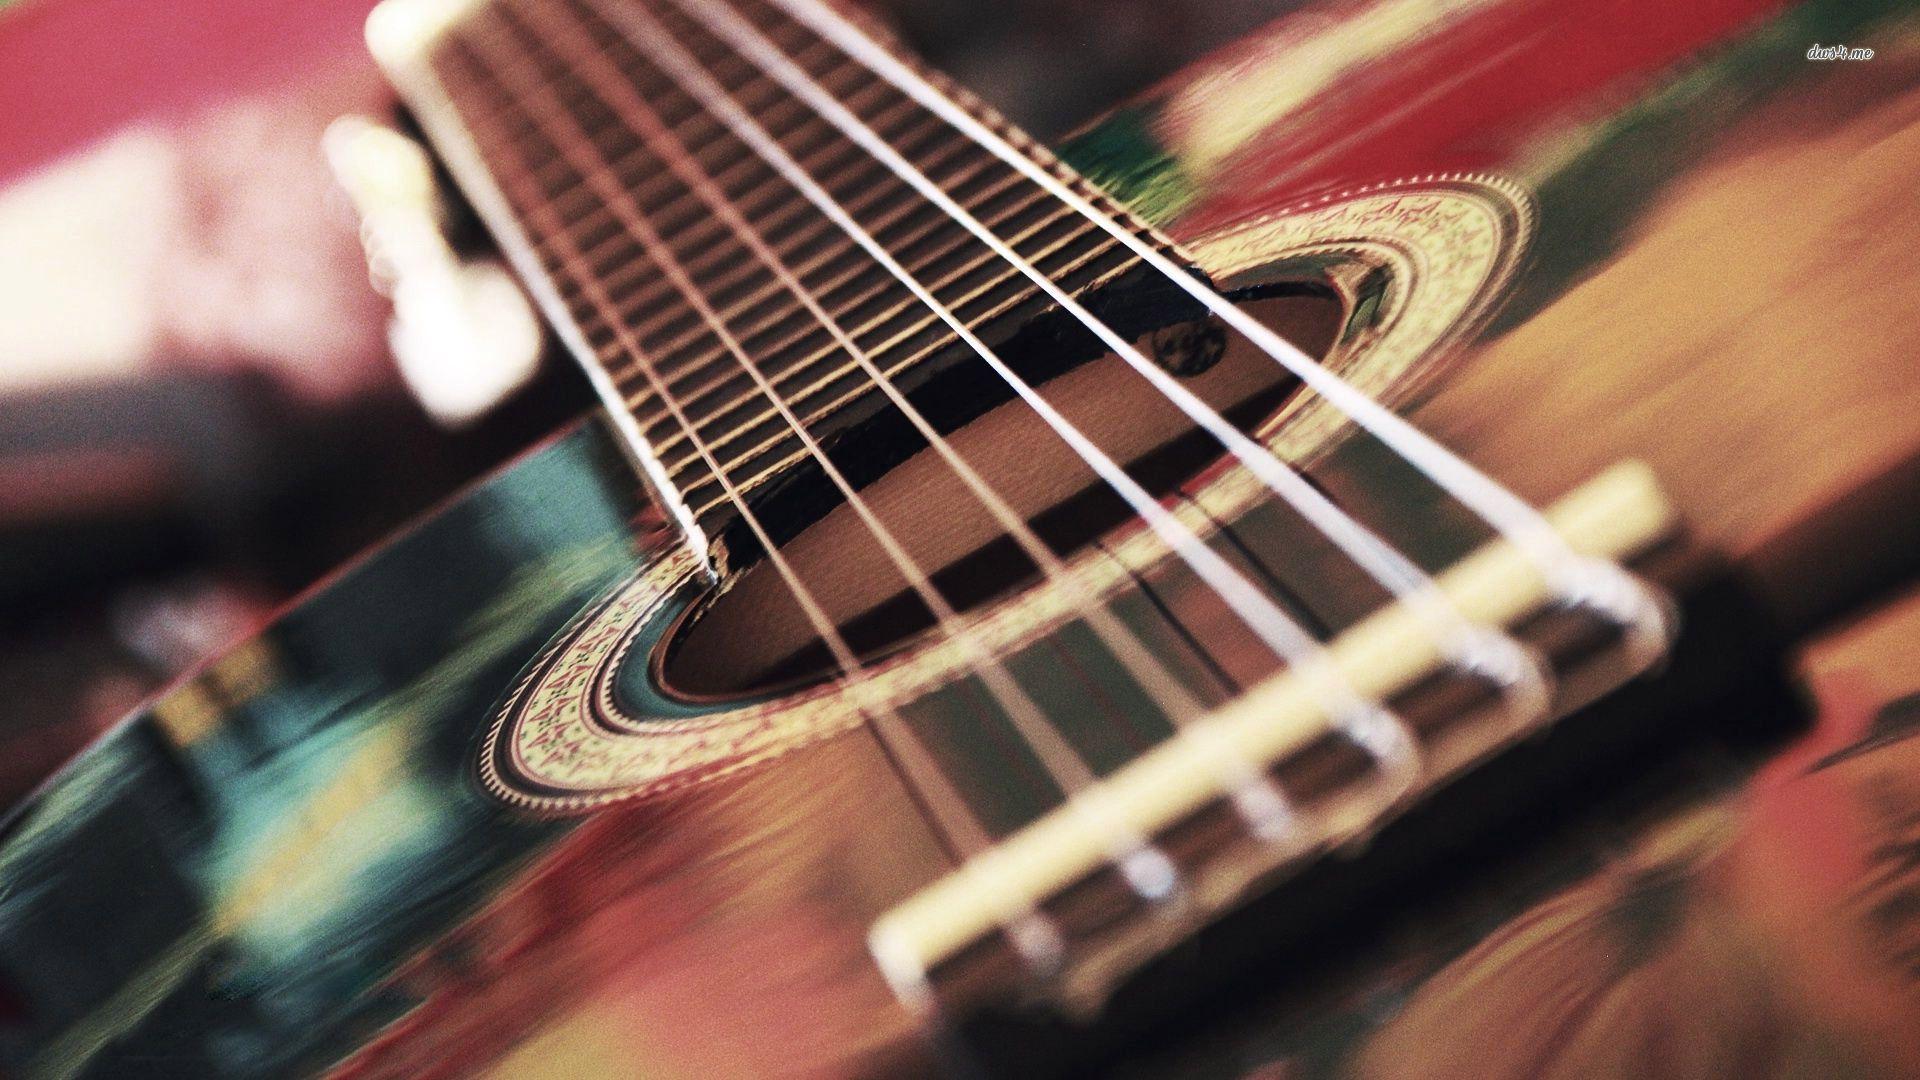 SEQ18: Acoustic Guitar Wallpaper, Acoustic Guitar Wallpaper